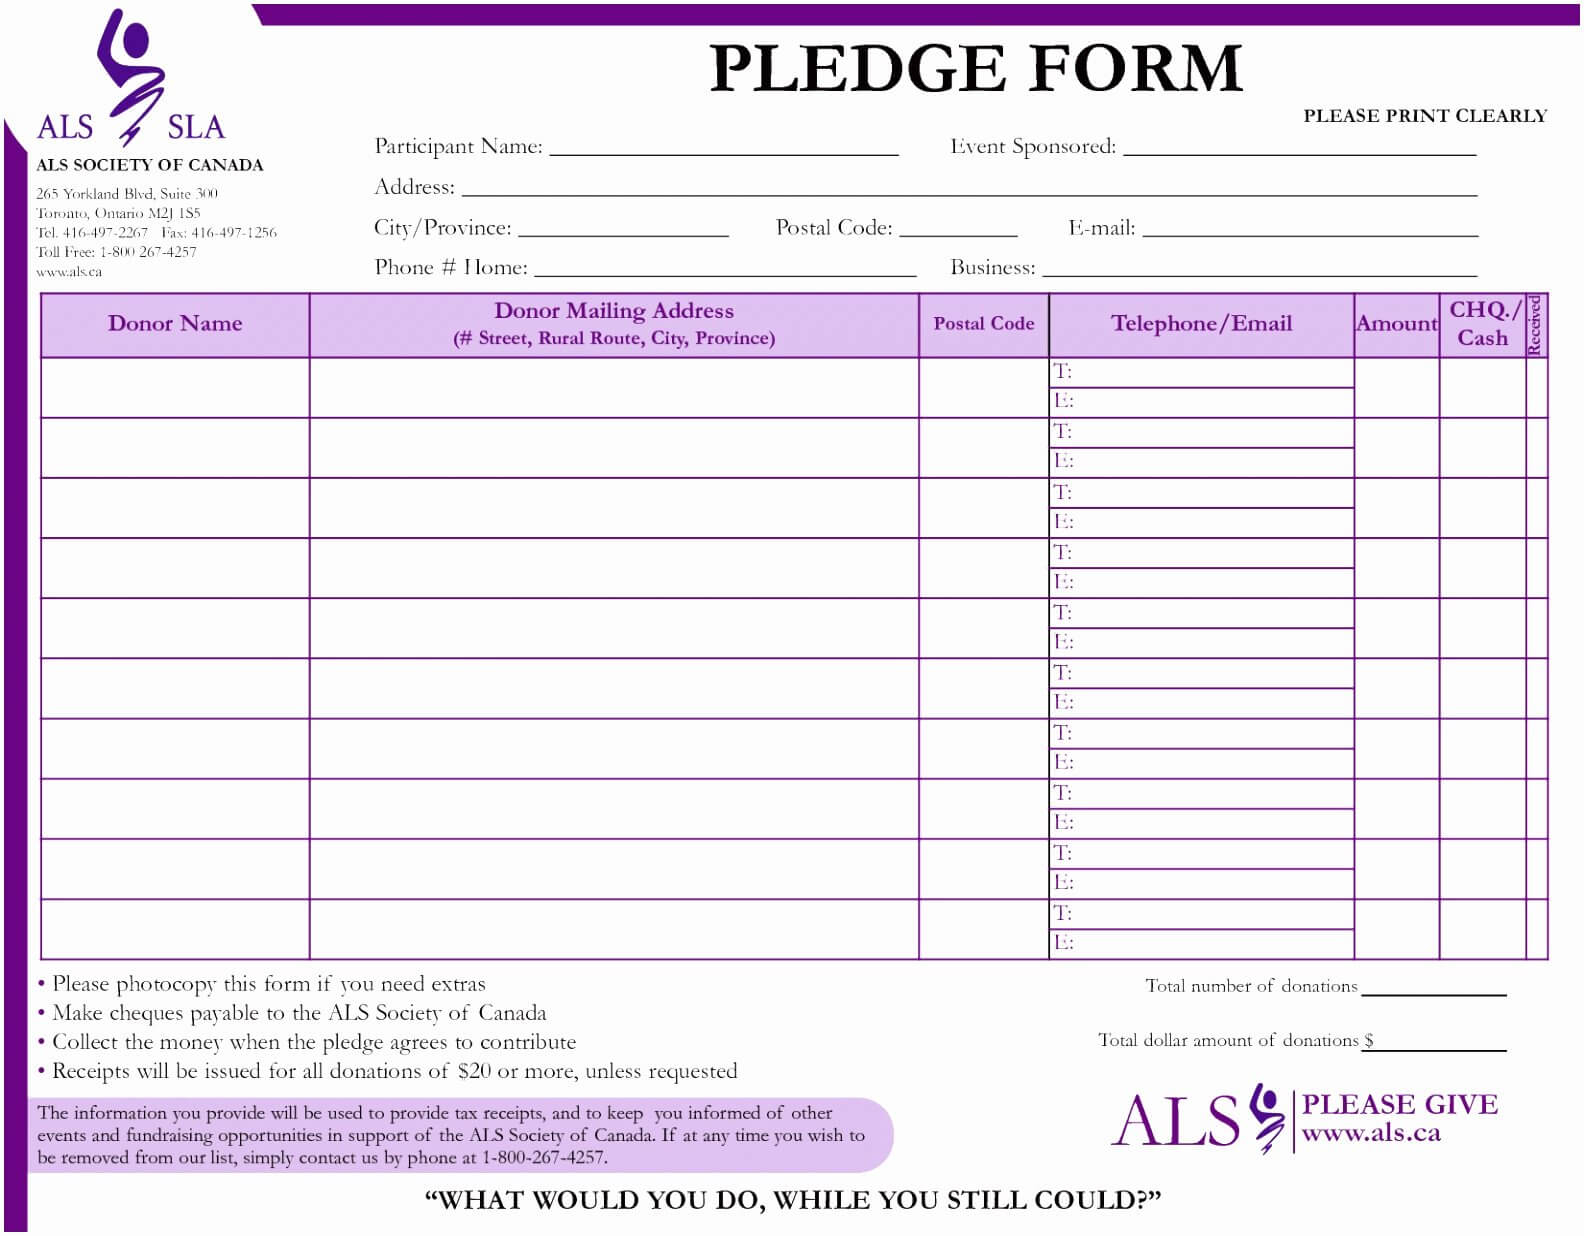 039 Pledge Card Template Word Best Of Fundraiser Form Pttyt With Regard To Pledge Card Template For Church